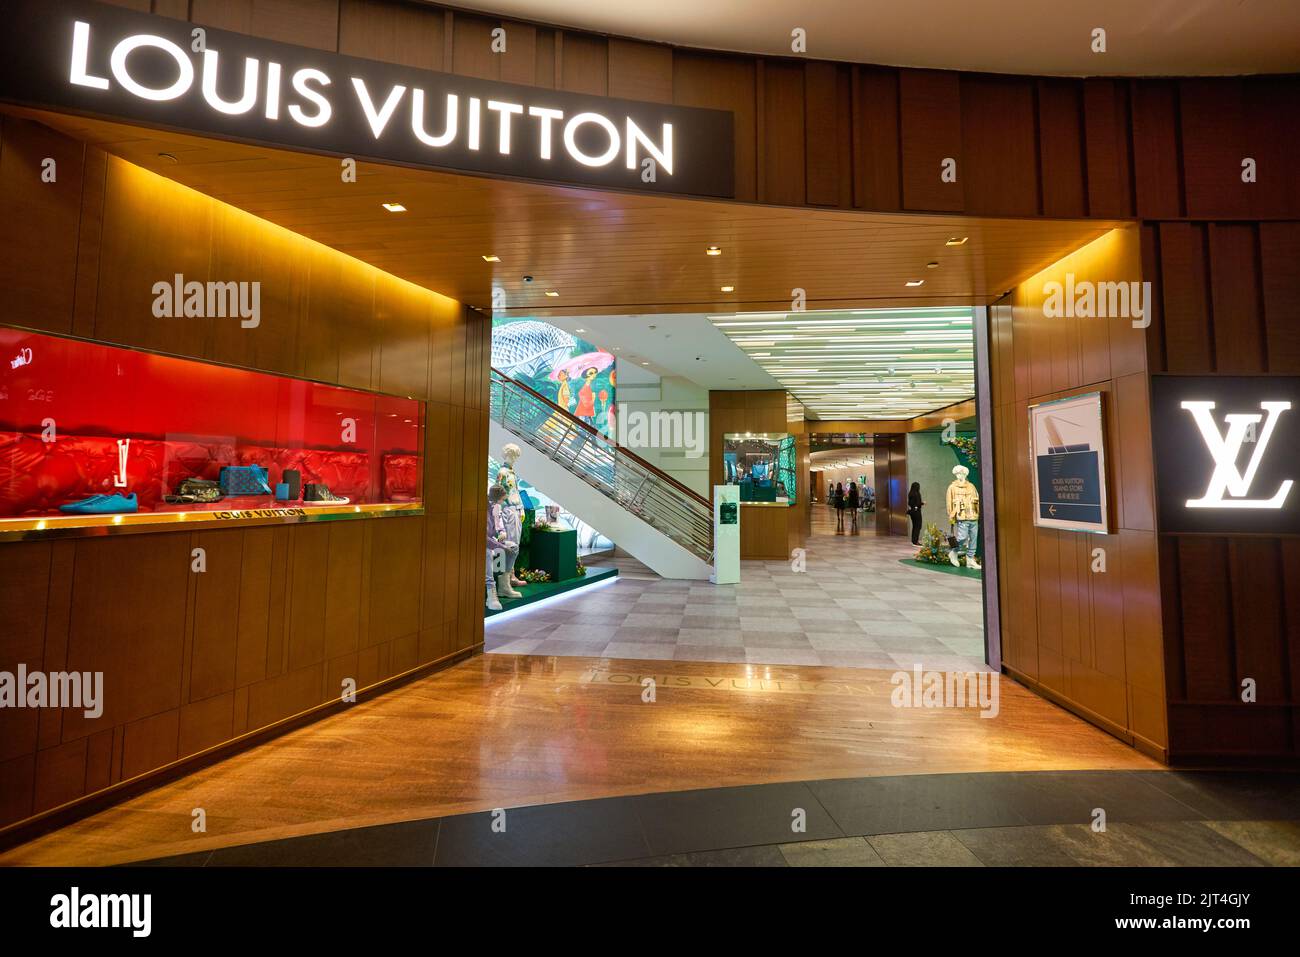 SINGAPORE - JANUARY 20, 2020: interior shot of Louis Vuitton